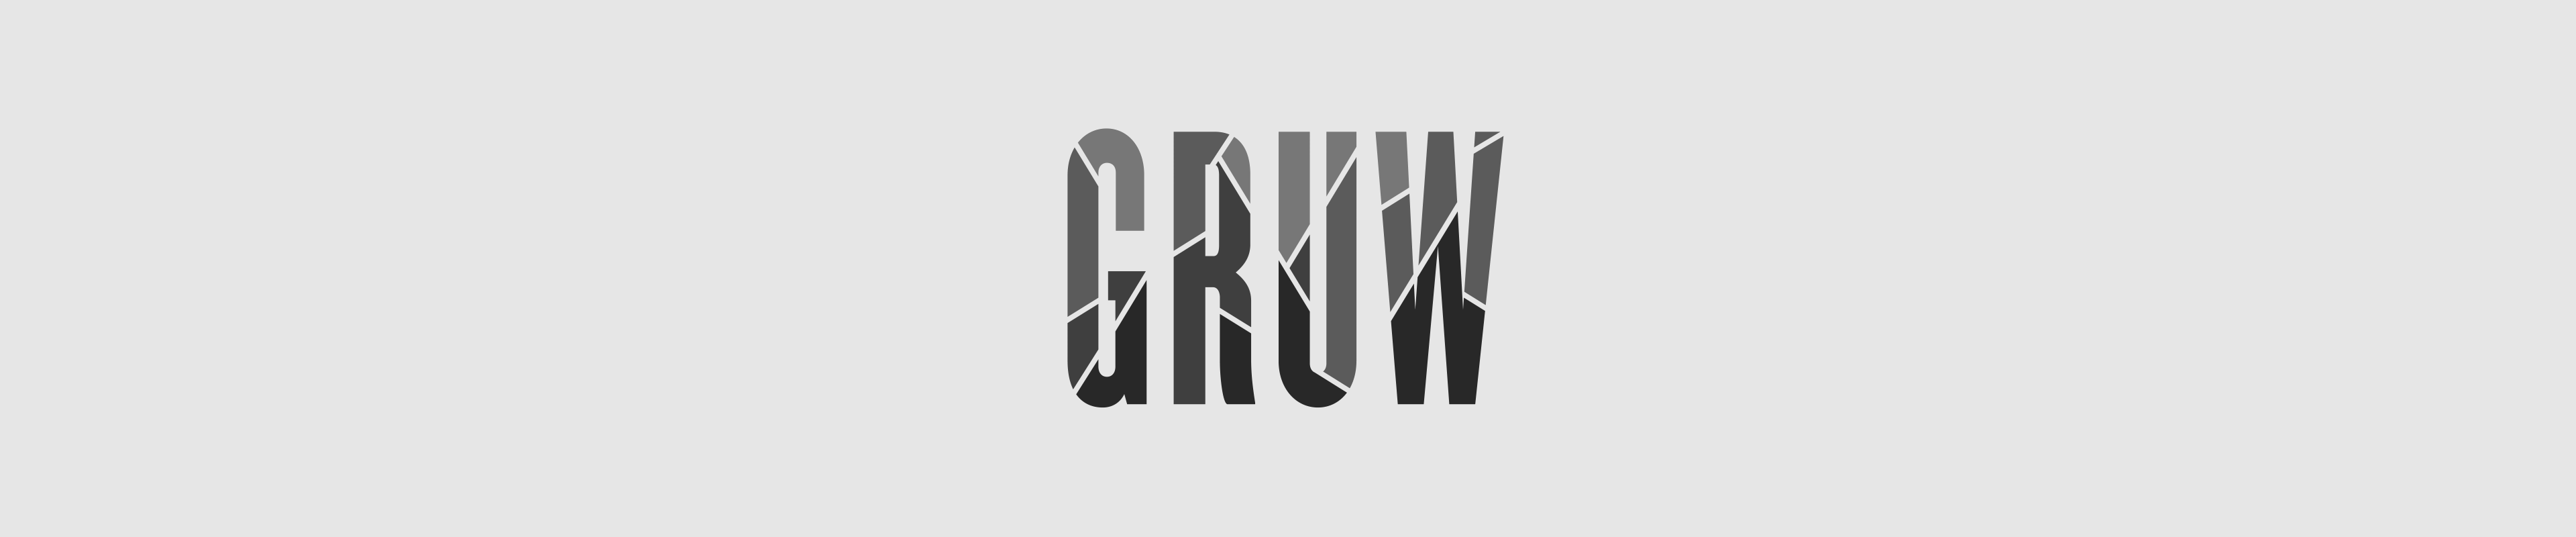 Animation of buildup of Gruw logo